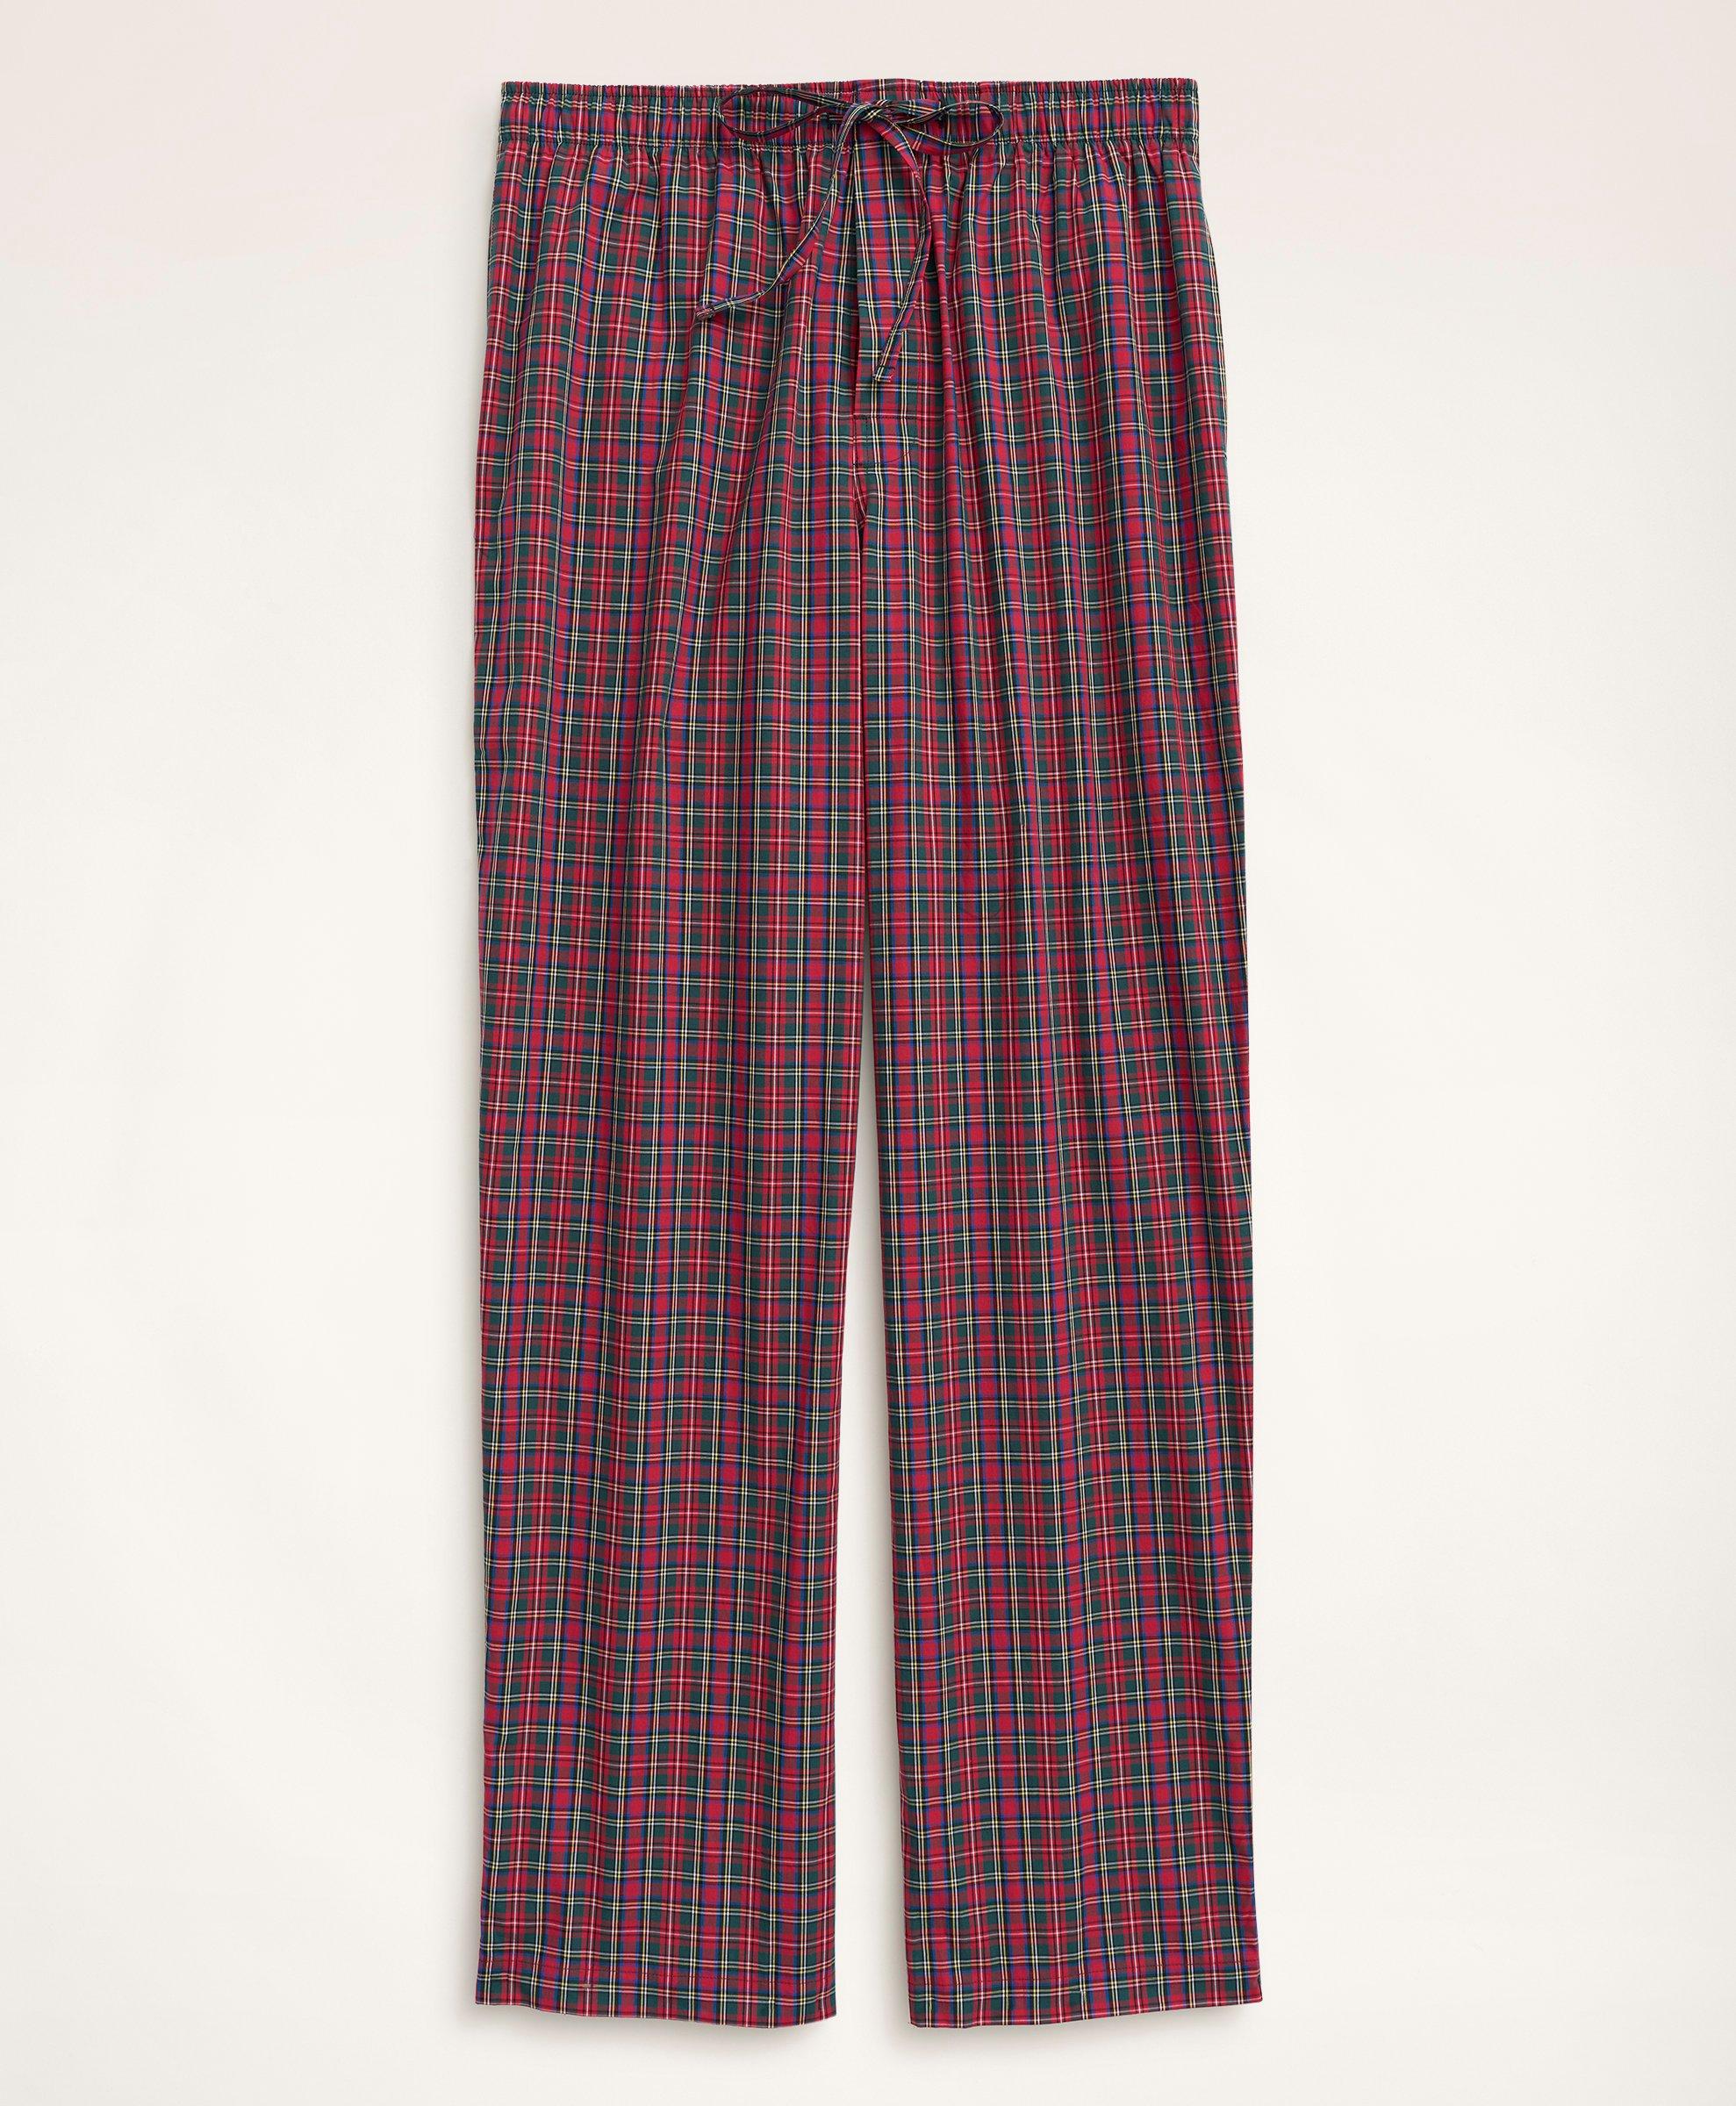 Brooks Brothers Pants Khaki Red Fleece Plaid Flannel Lined Mens 34